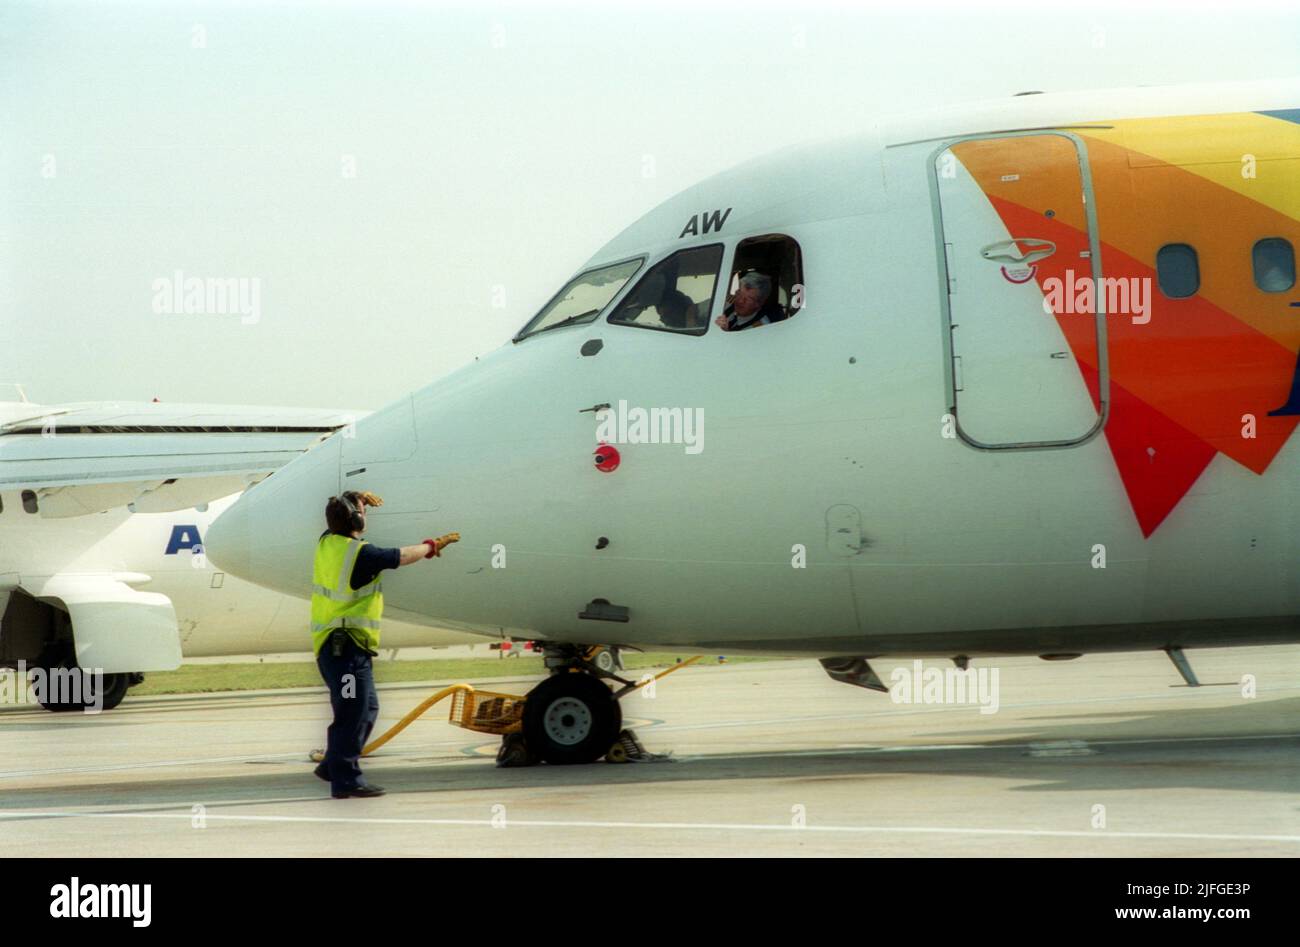 London City Airport groundcrew talking to the airplane pilot Stock Photo